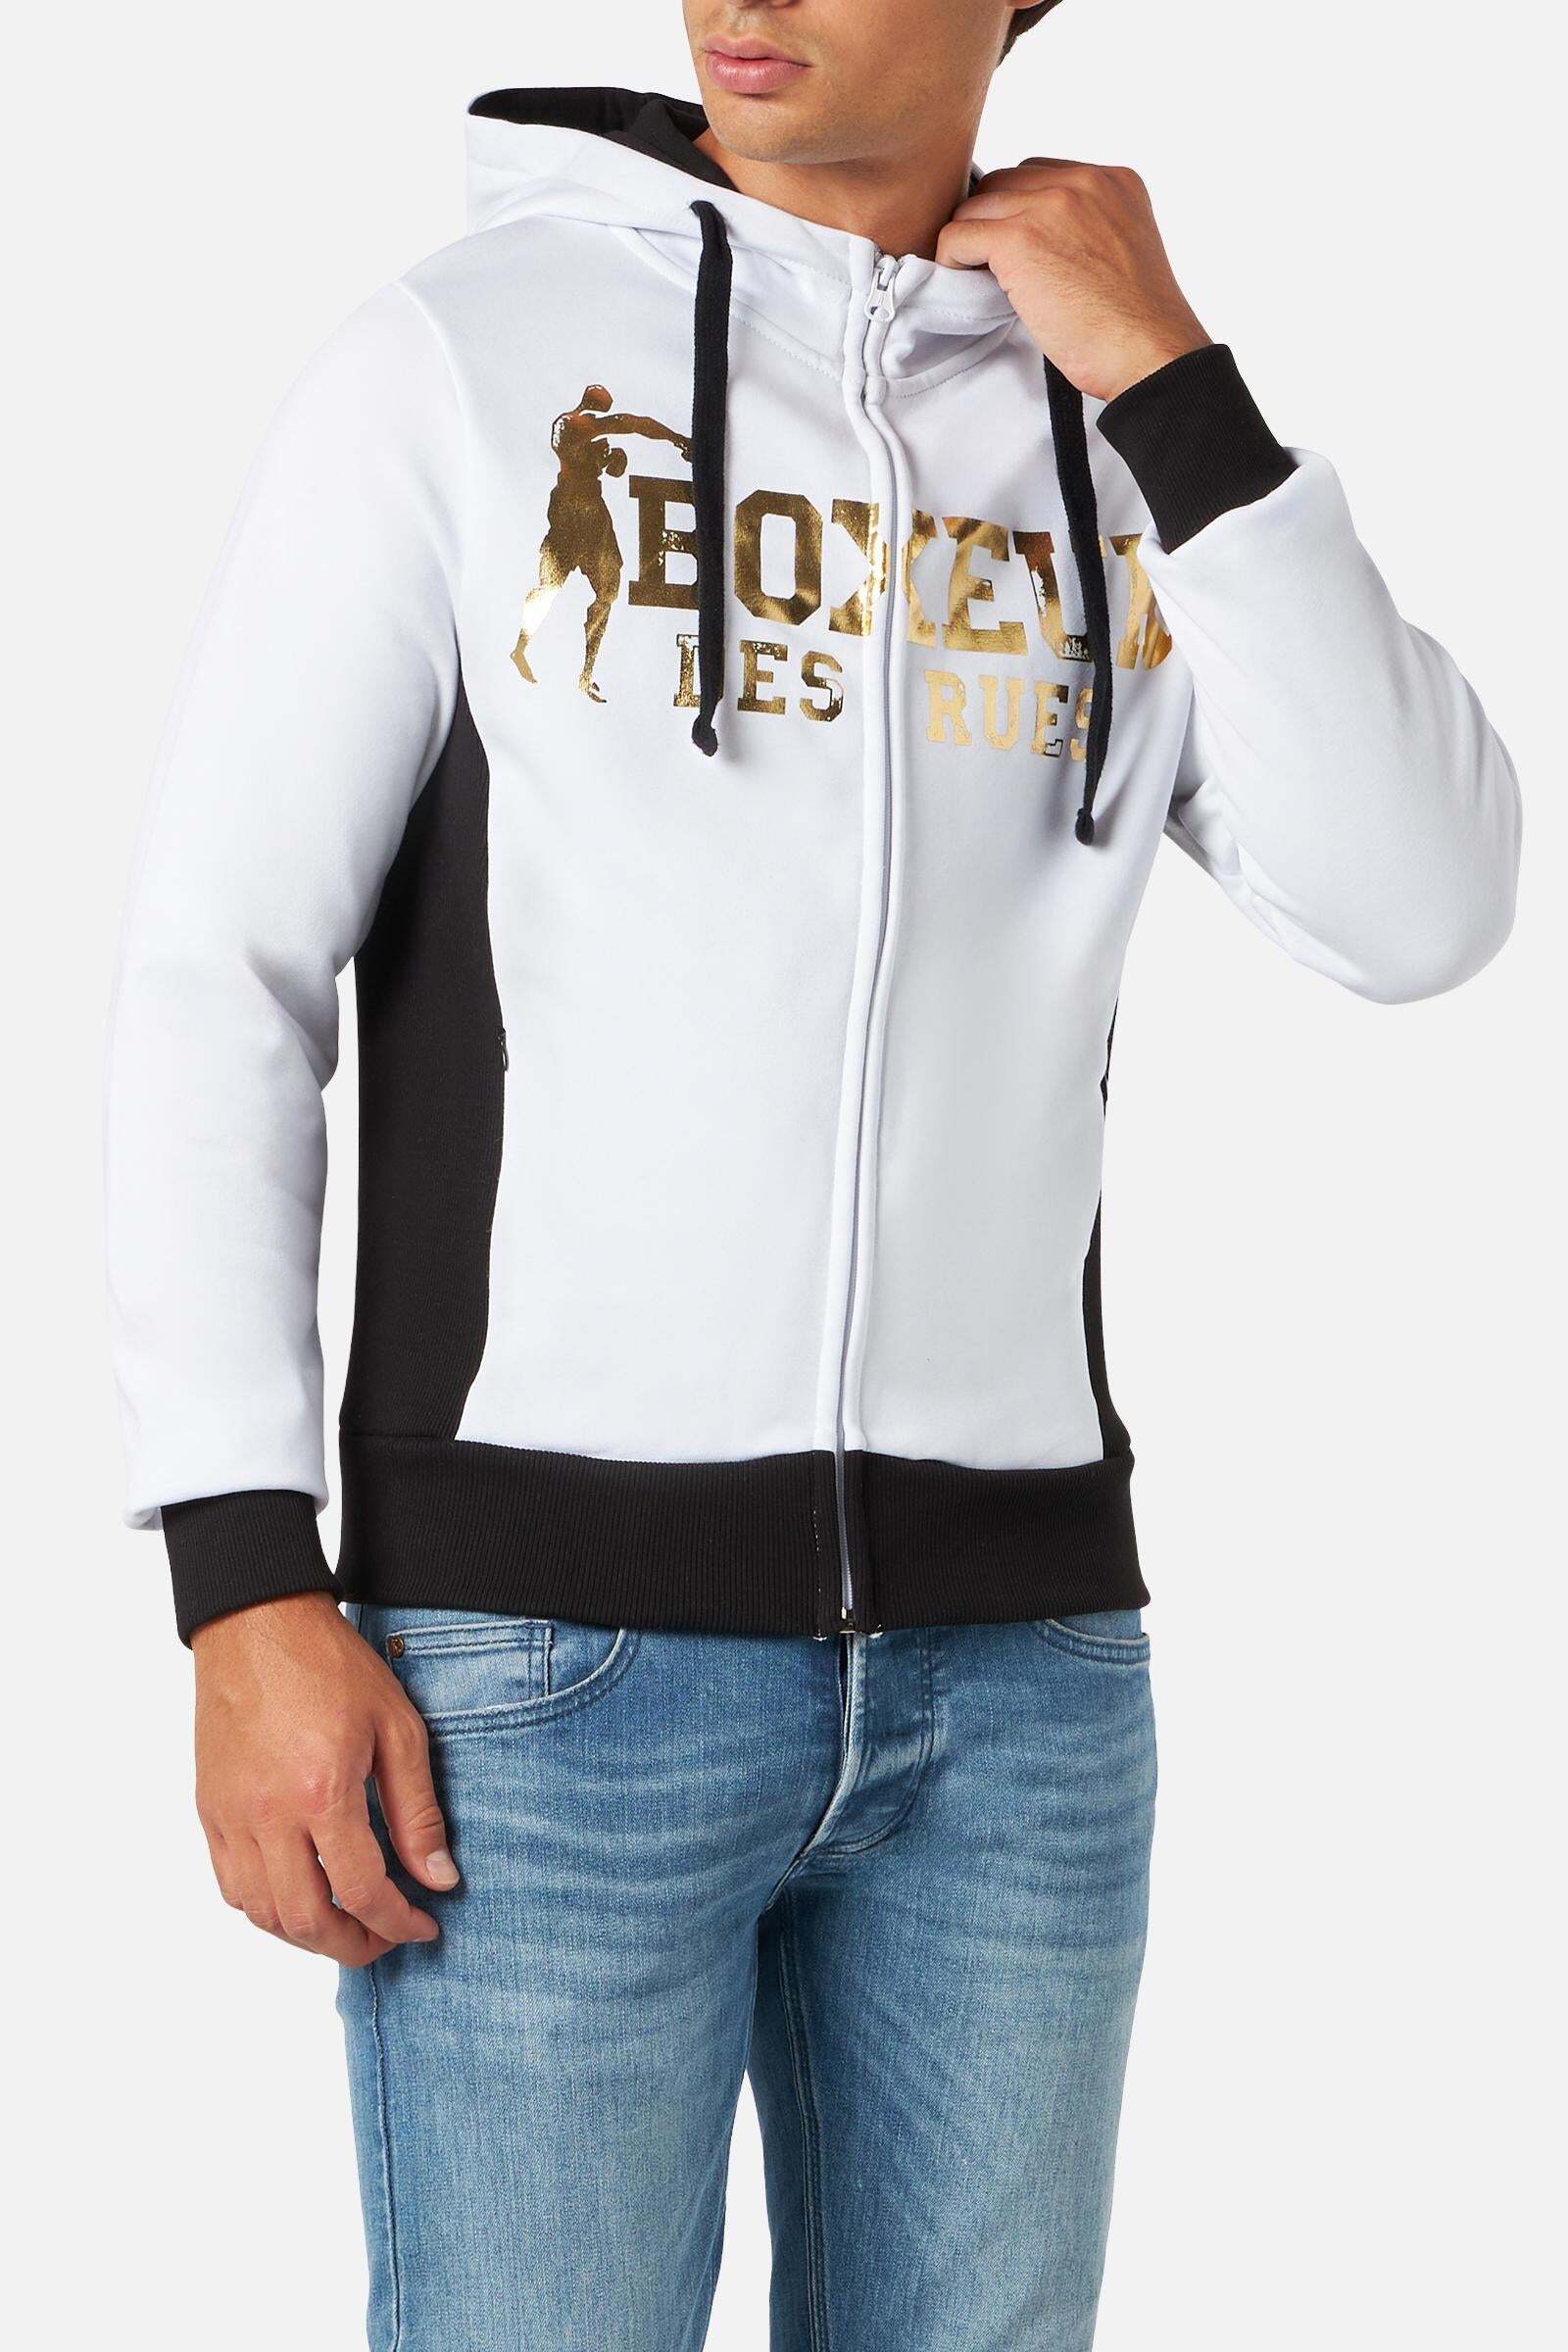 BOXEUR DES RUES Sweatjacke »Sweatshirts Hooded Full Zip Sweatshirt« von BOXEUR DES RUES